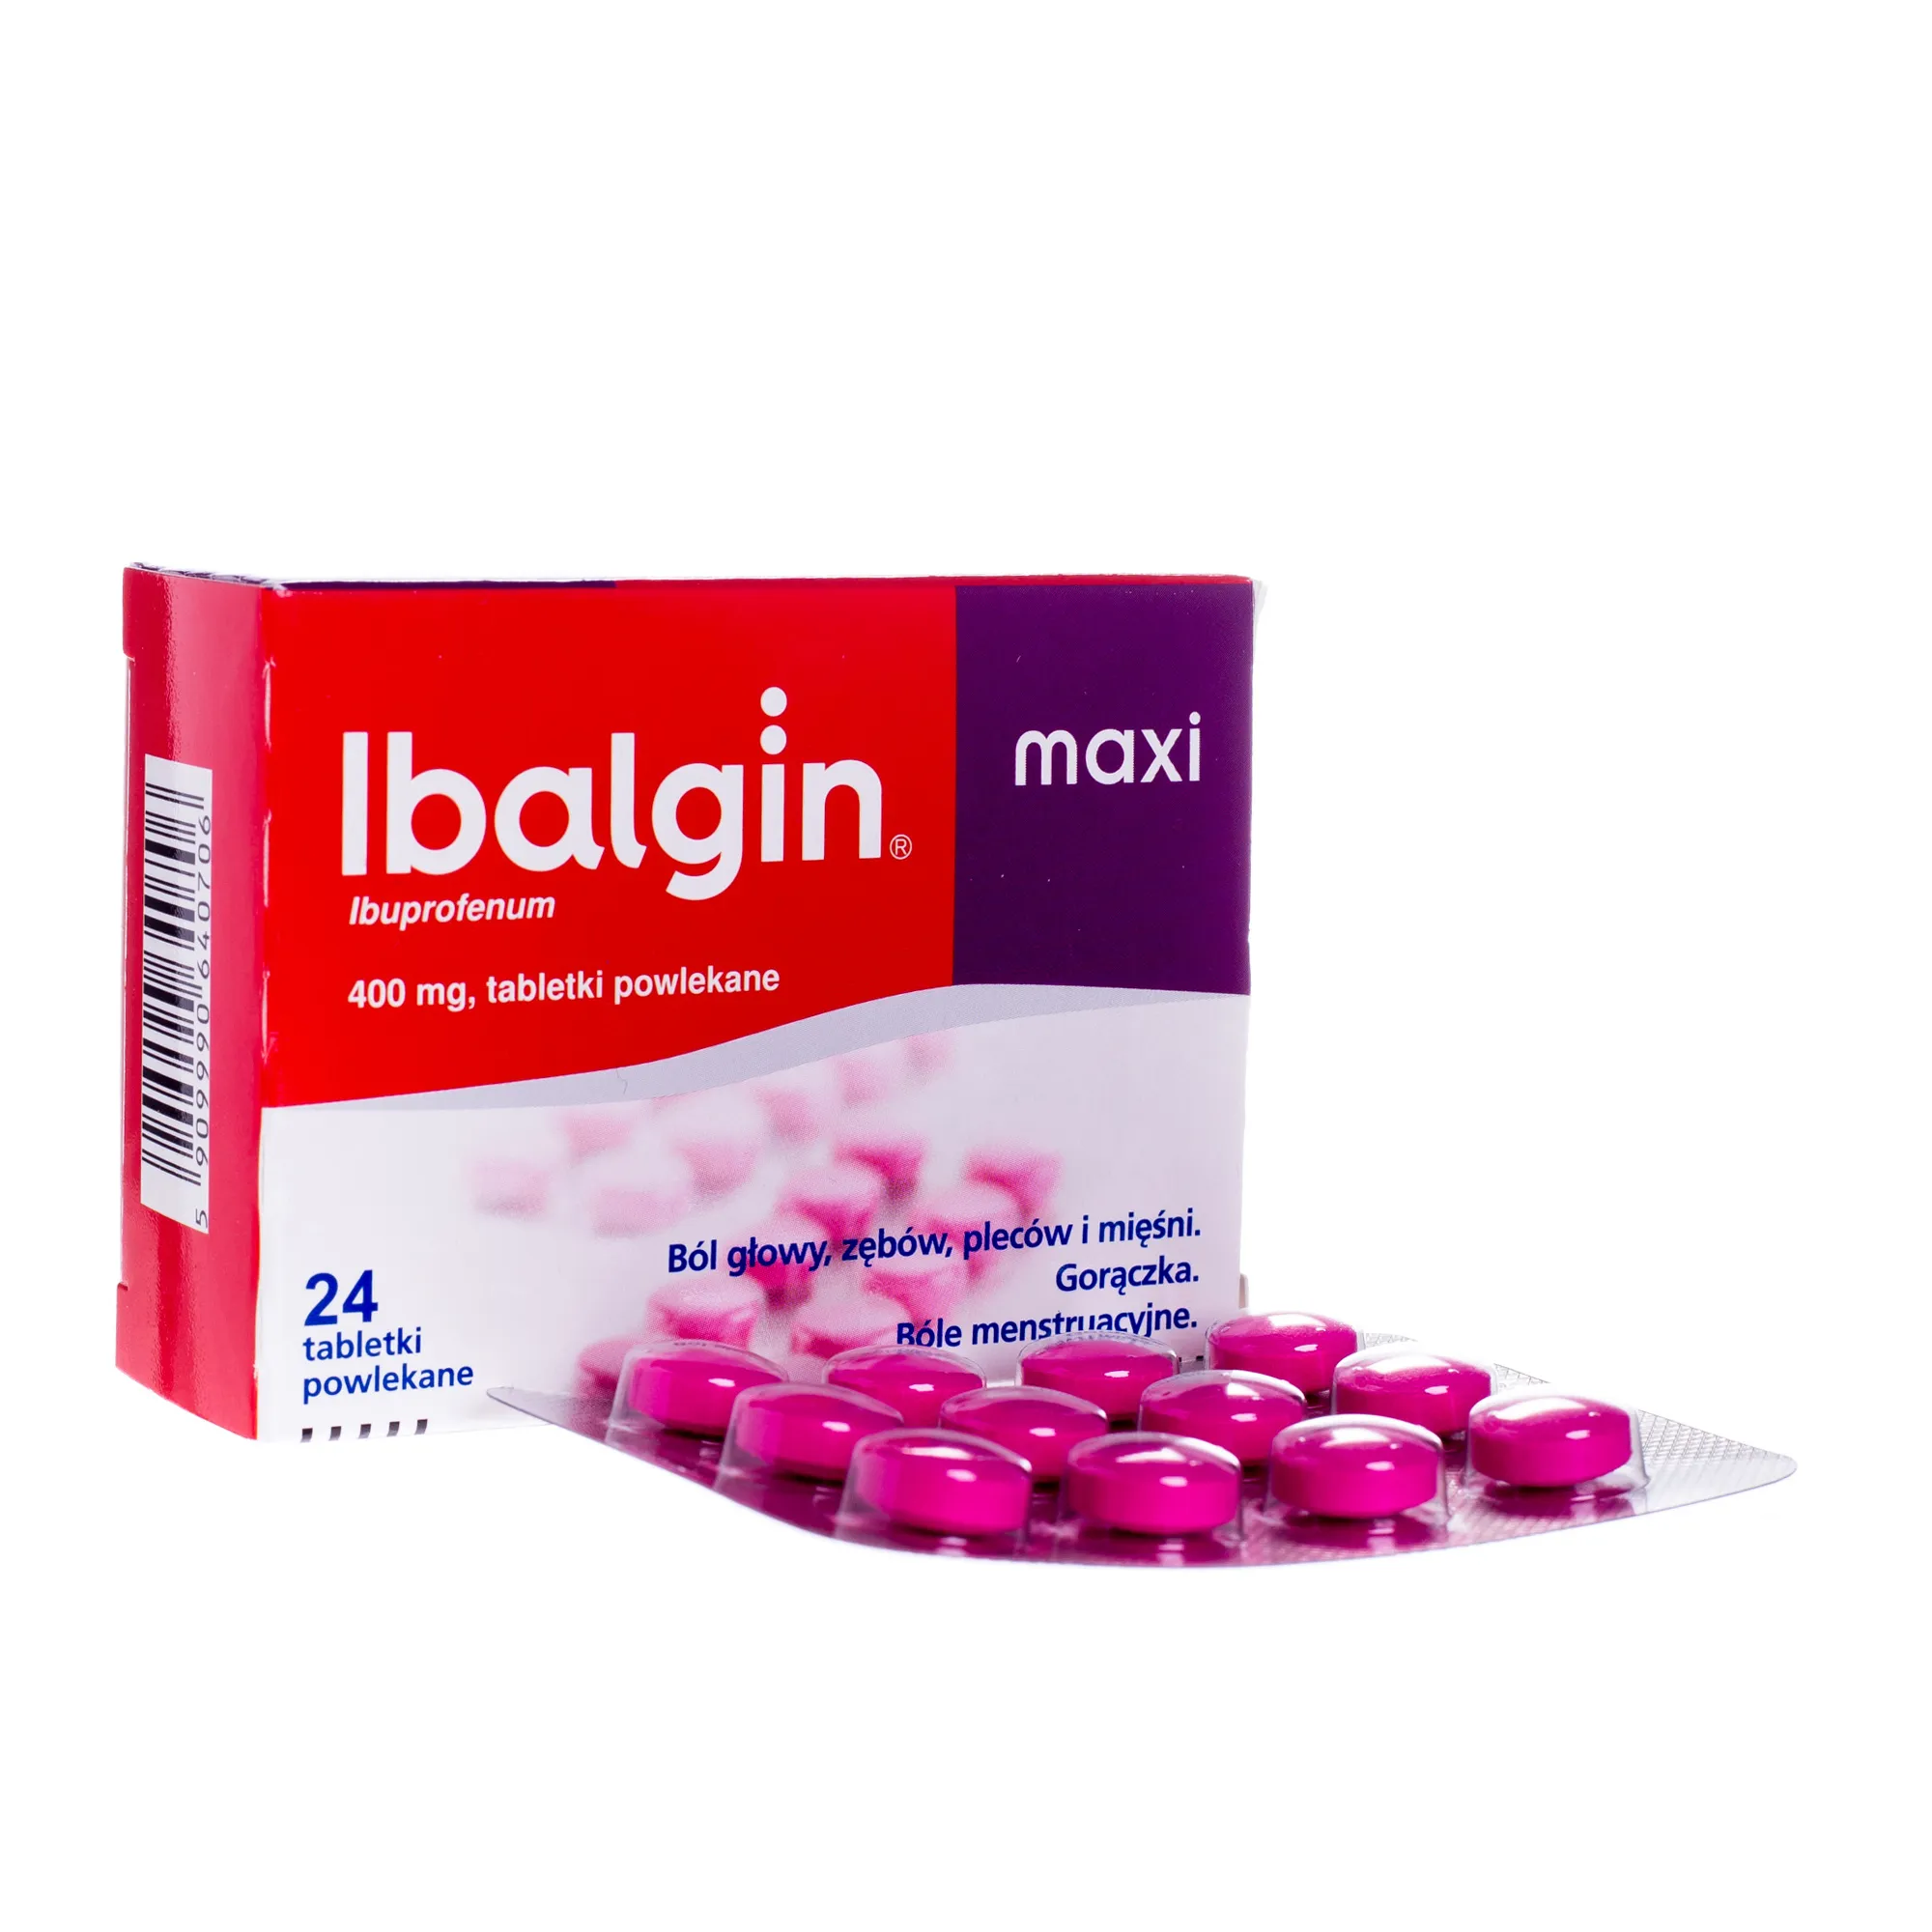 Ibalgin Maxi, 400 mg, 24 tabletki powlekane 